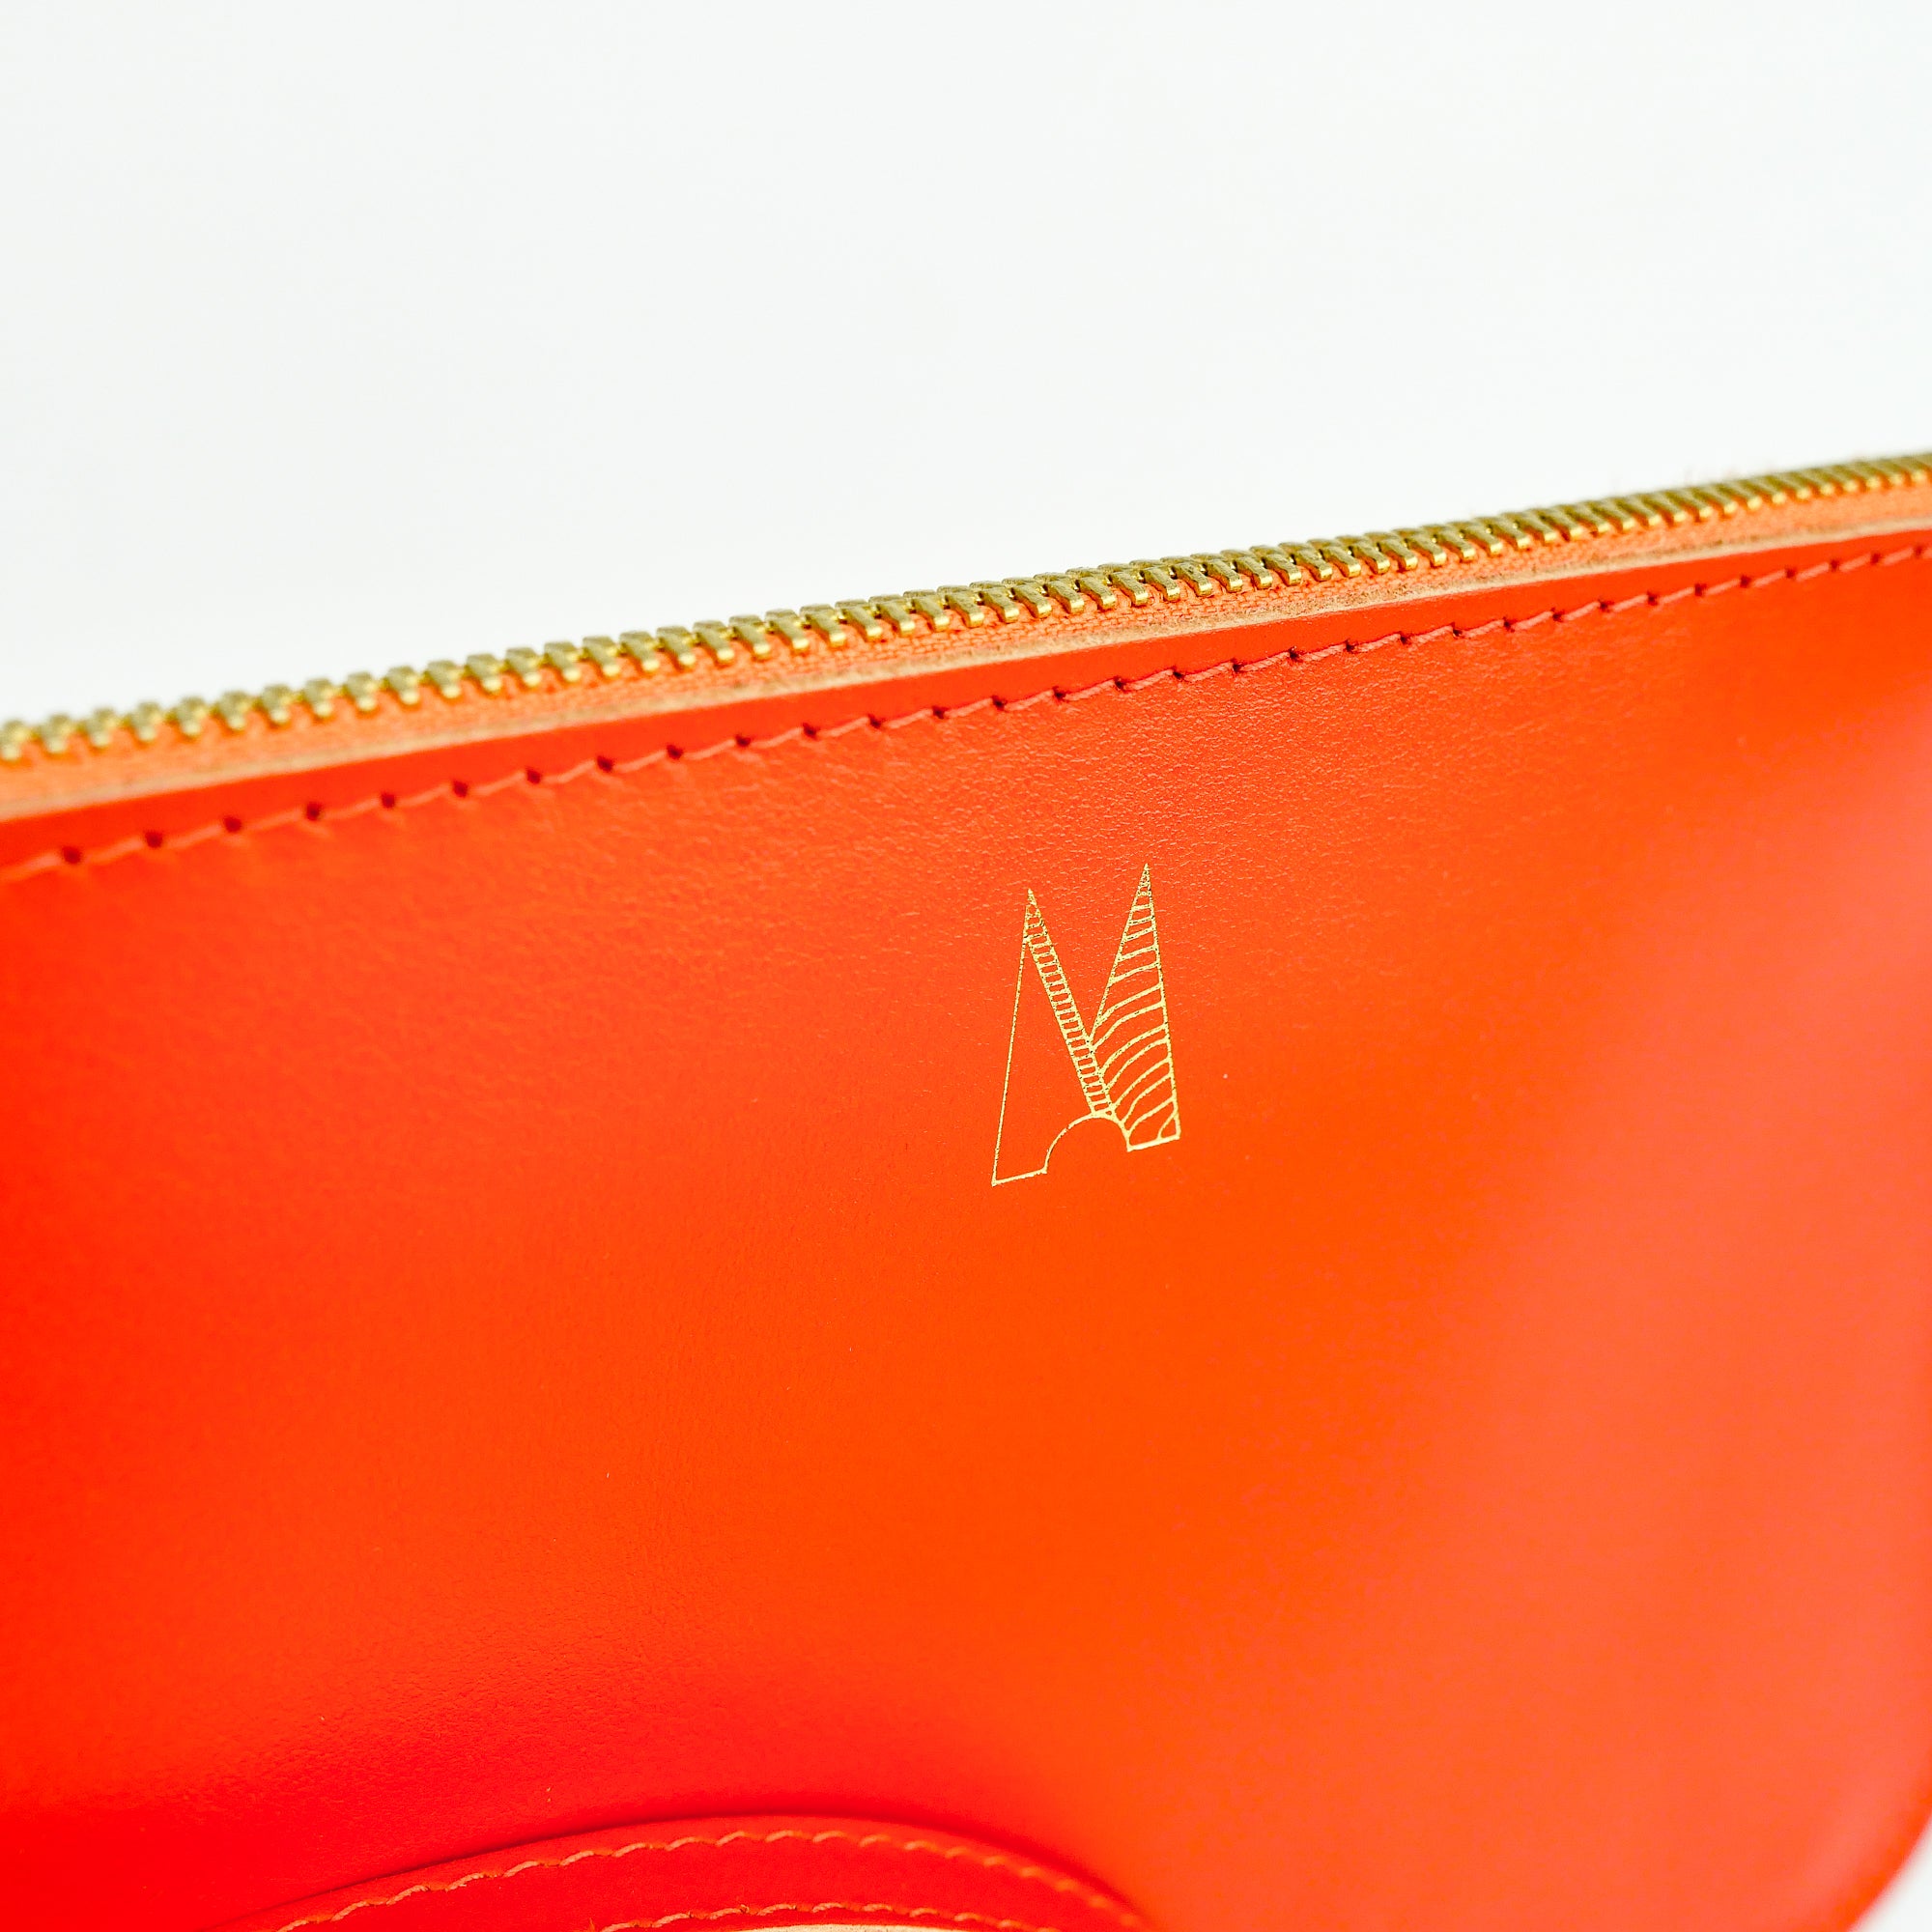 Tangerine Leather Wristlet Bag - Roam